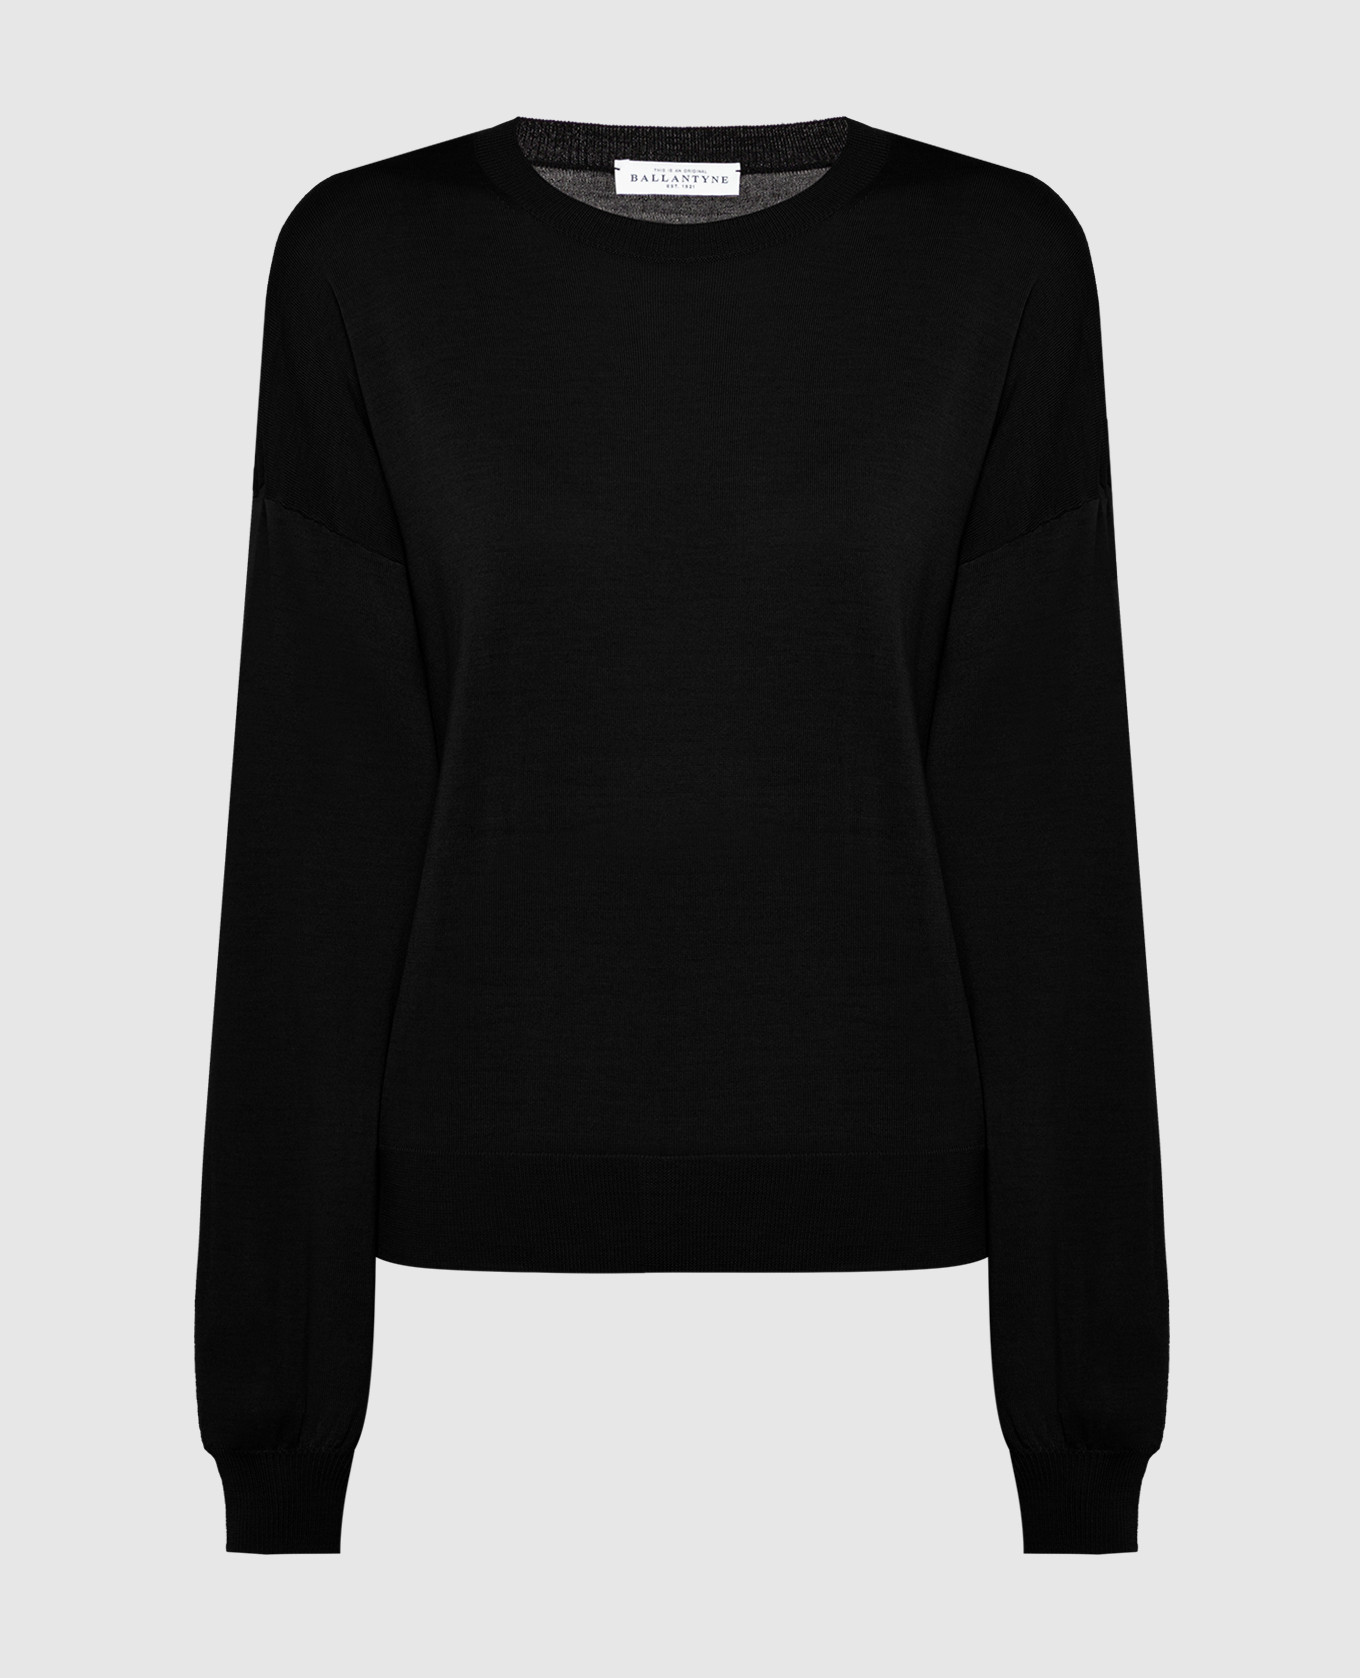 Black woolen jumper